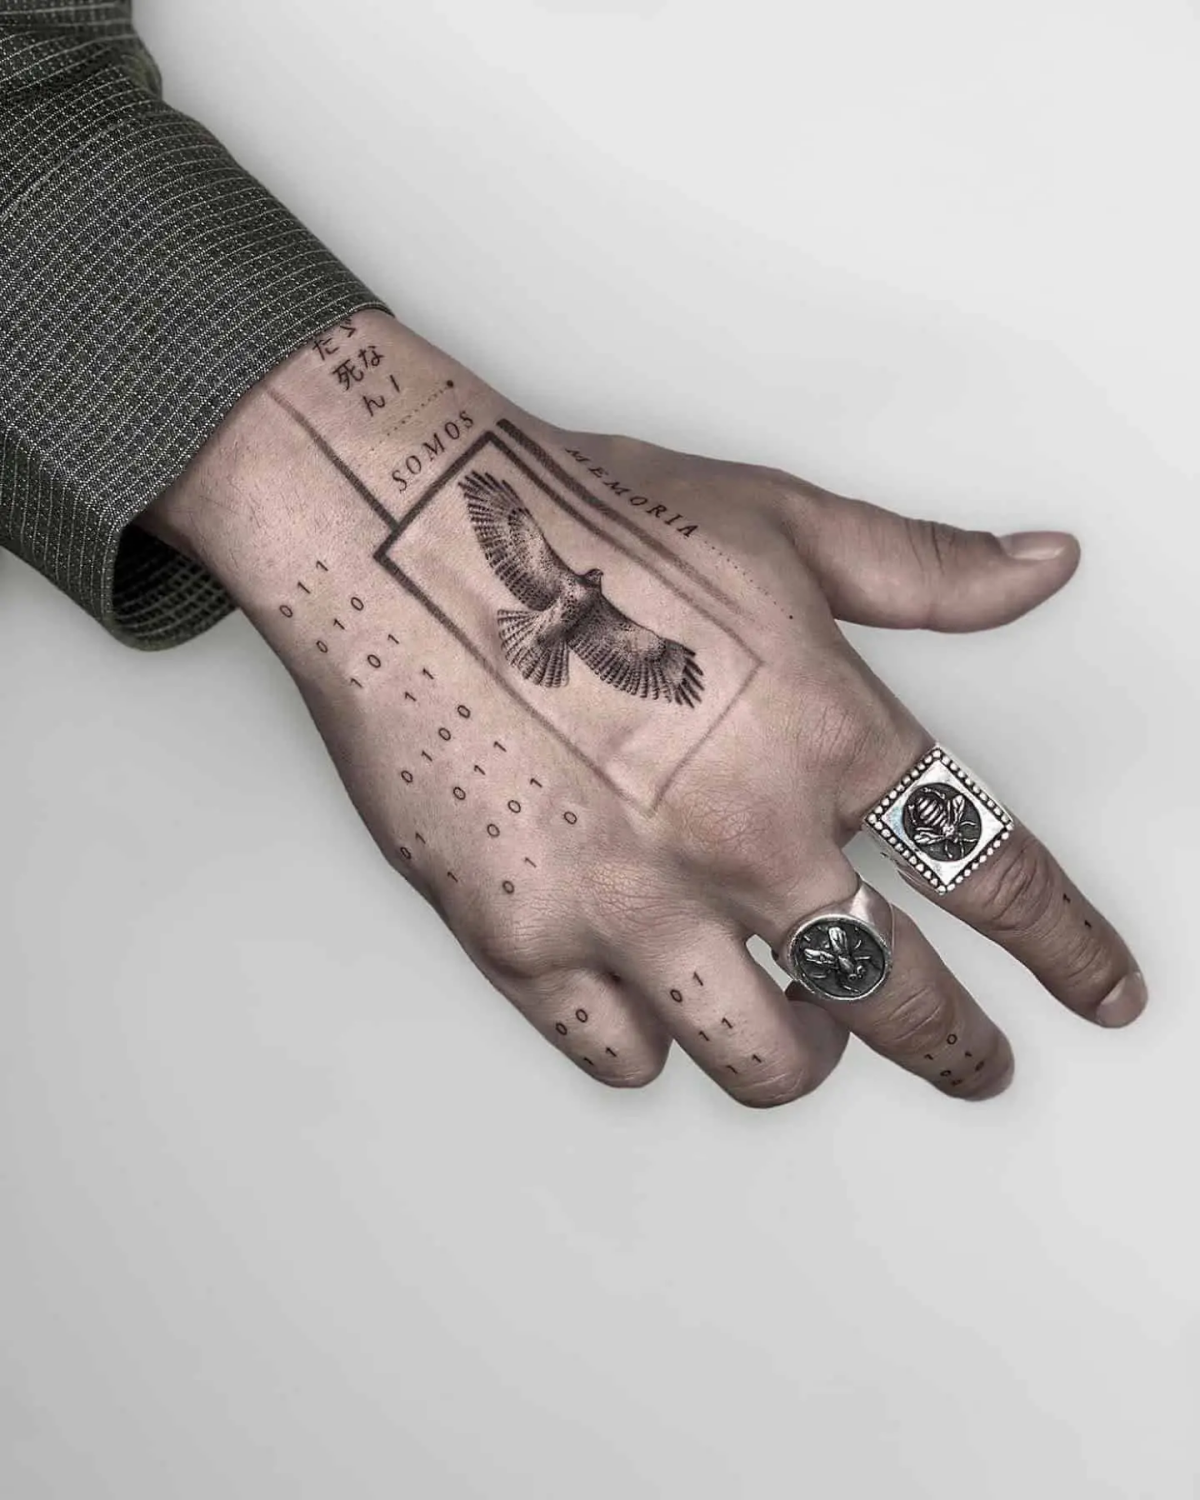 tattoo ideas for men hand.jpg